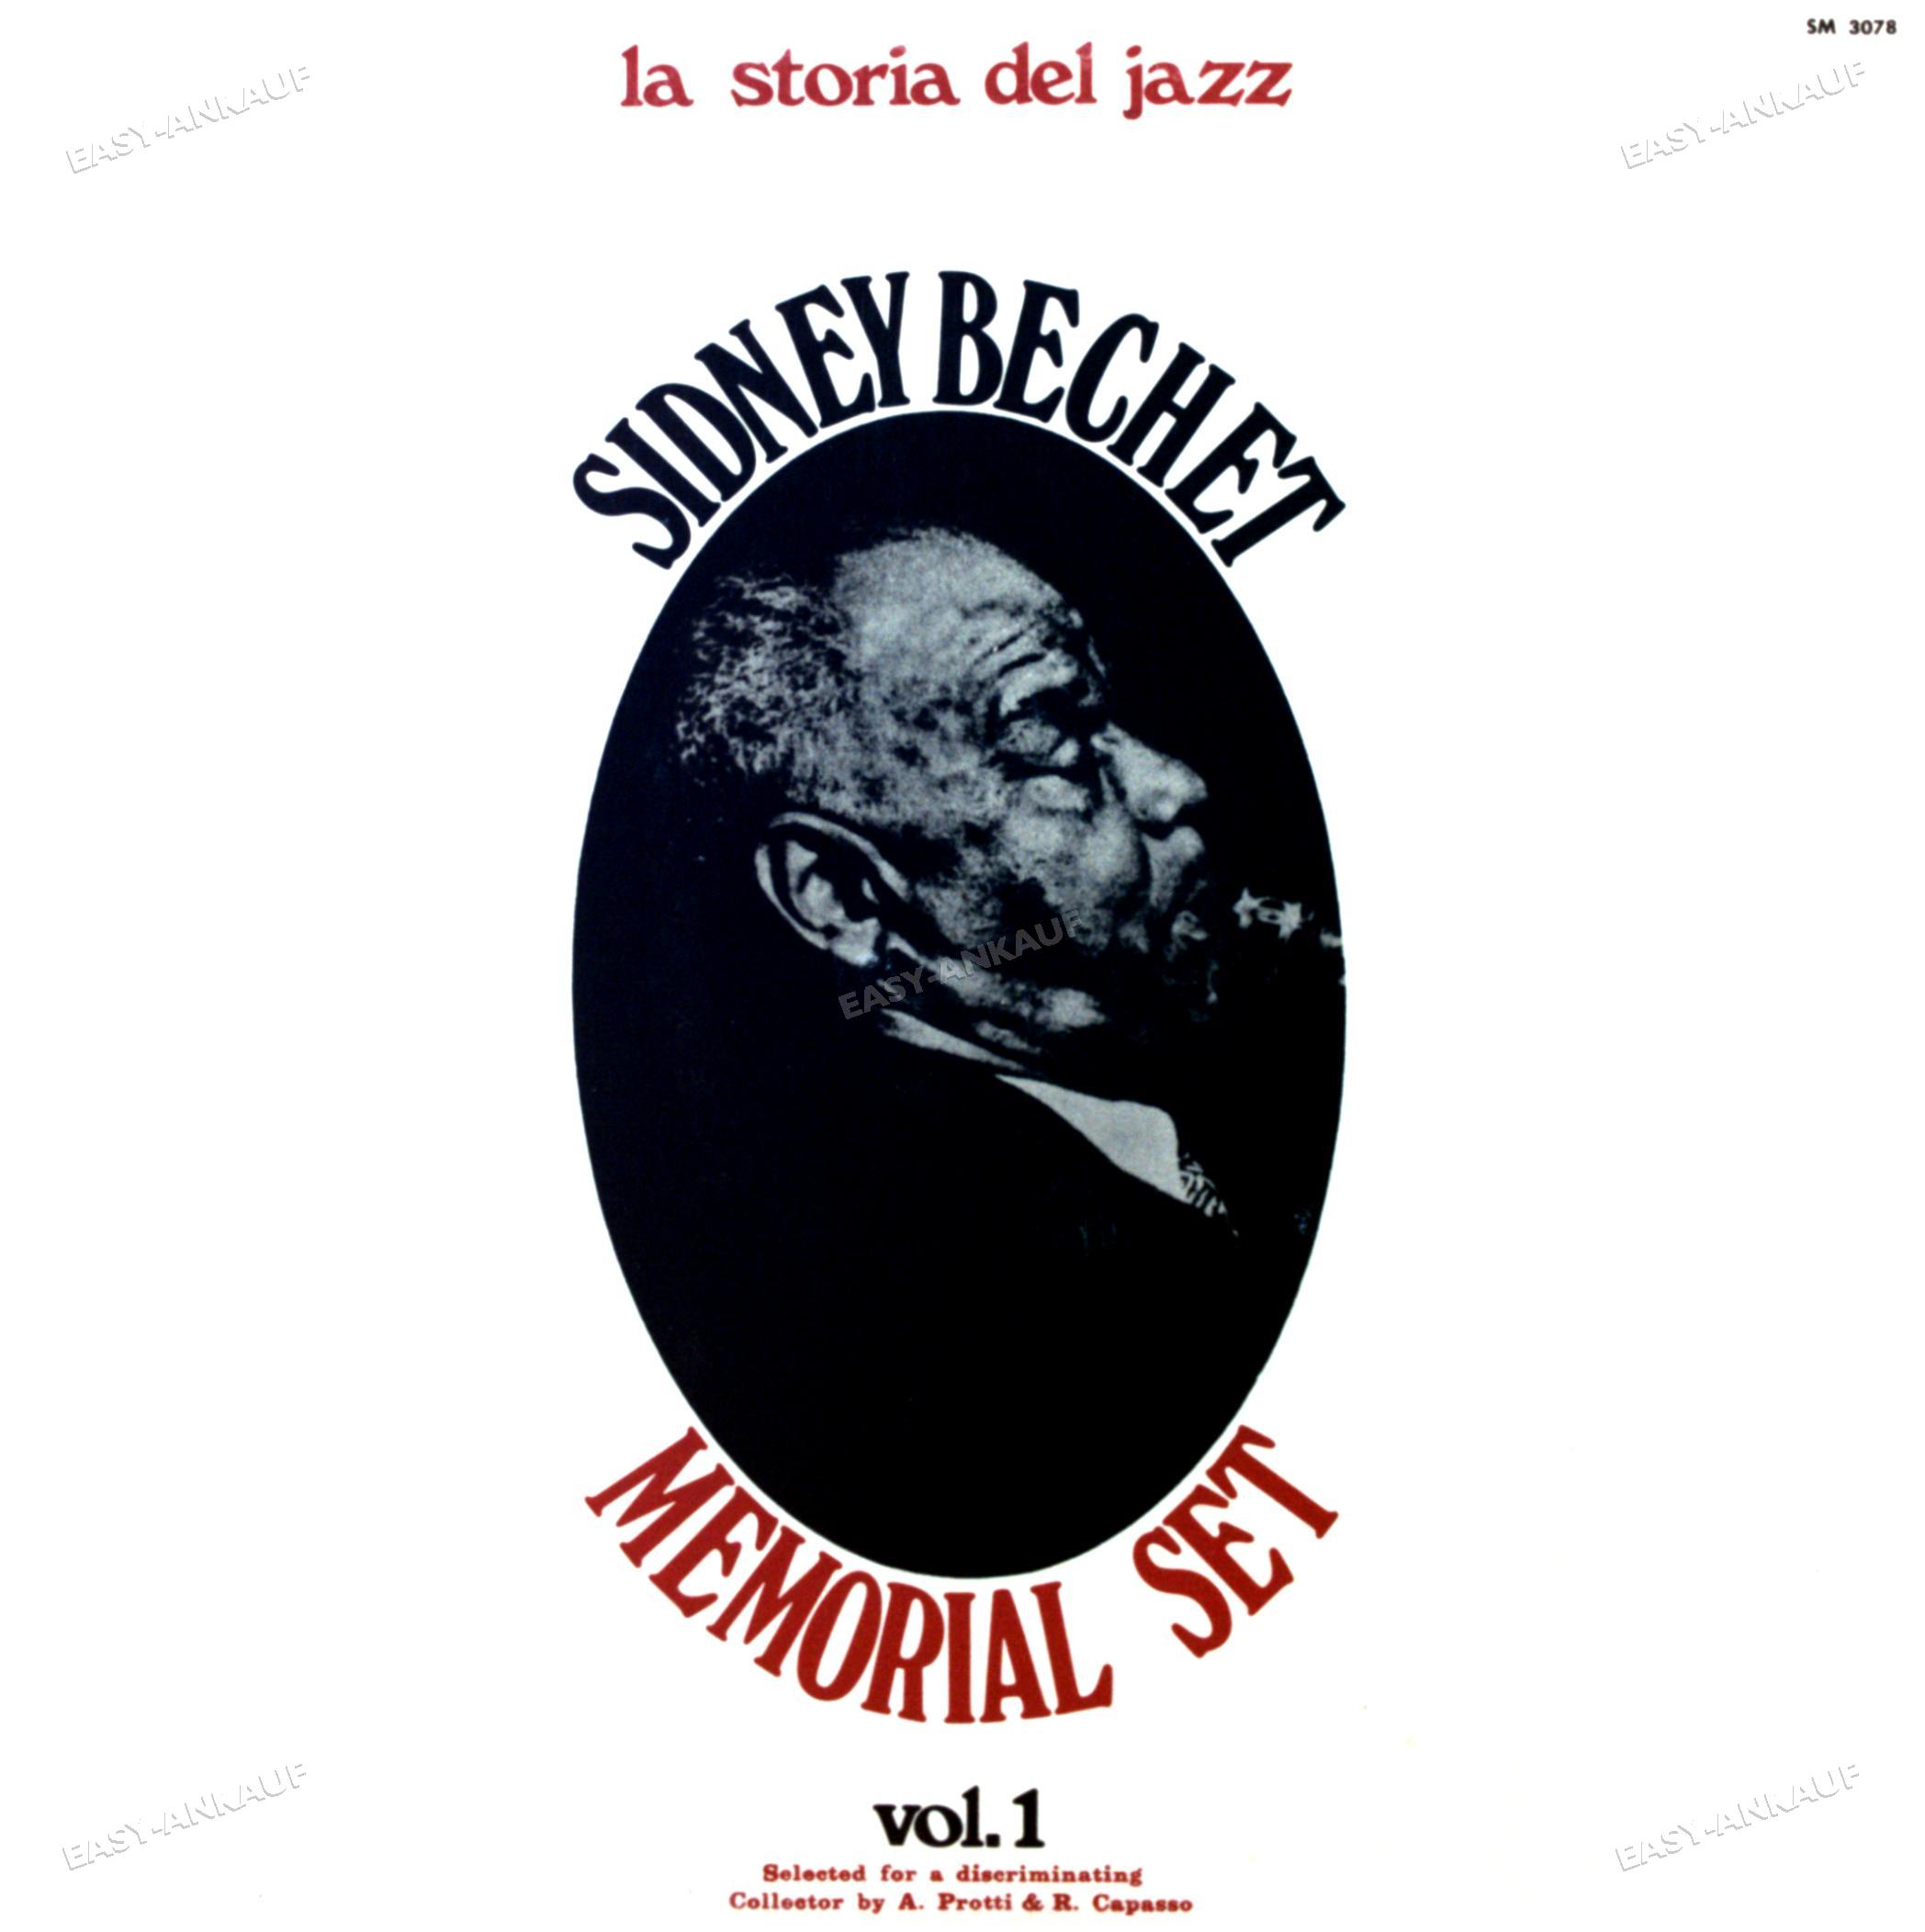 Sidney Bechet - Memorial Set Vol. 1 LP 1971 (VG+/VG+) '* - Zdjęcie 1 z 1